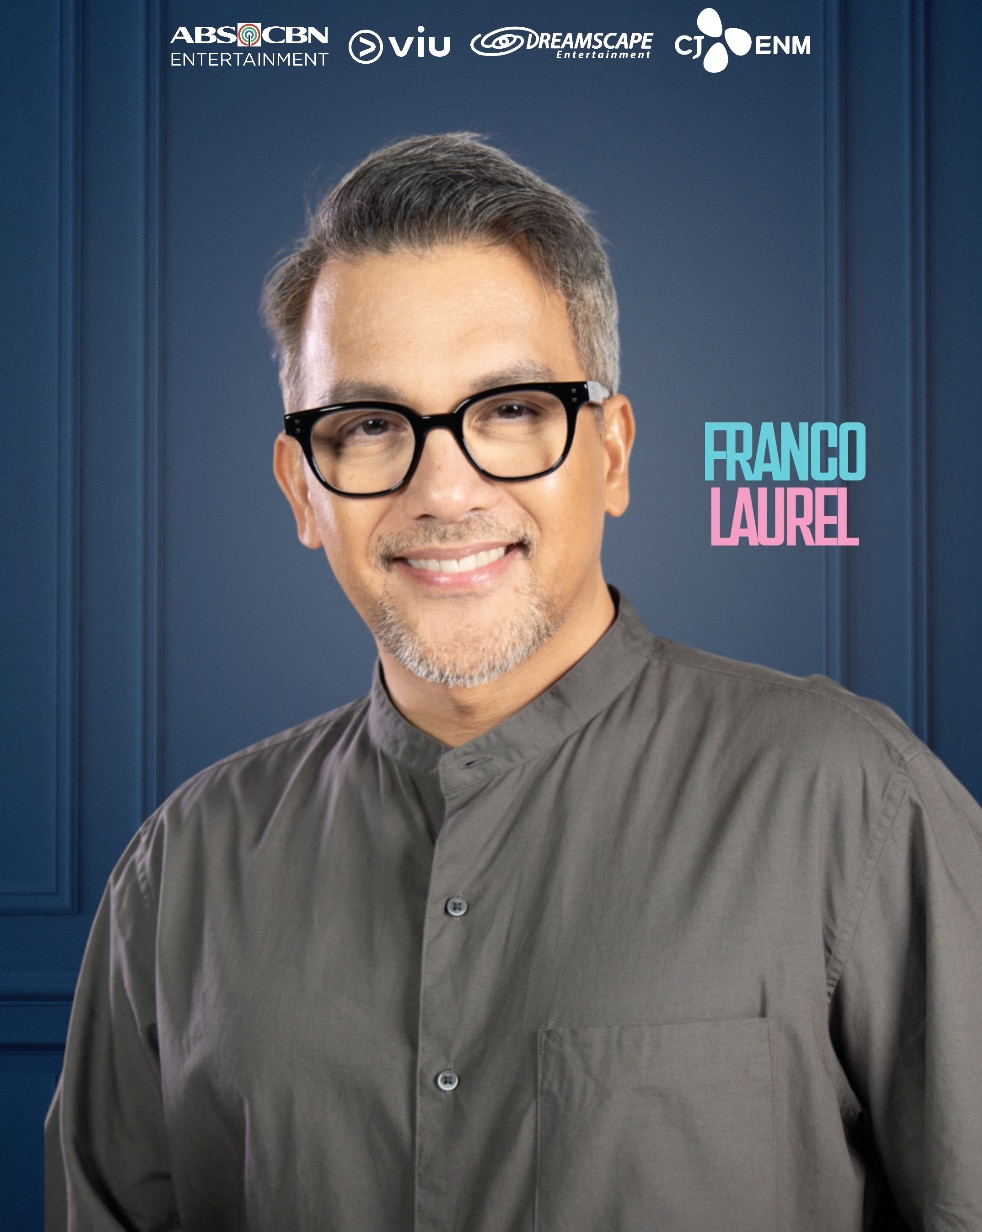 Franco Laurel